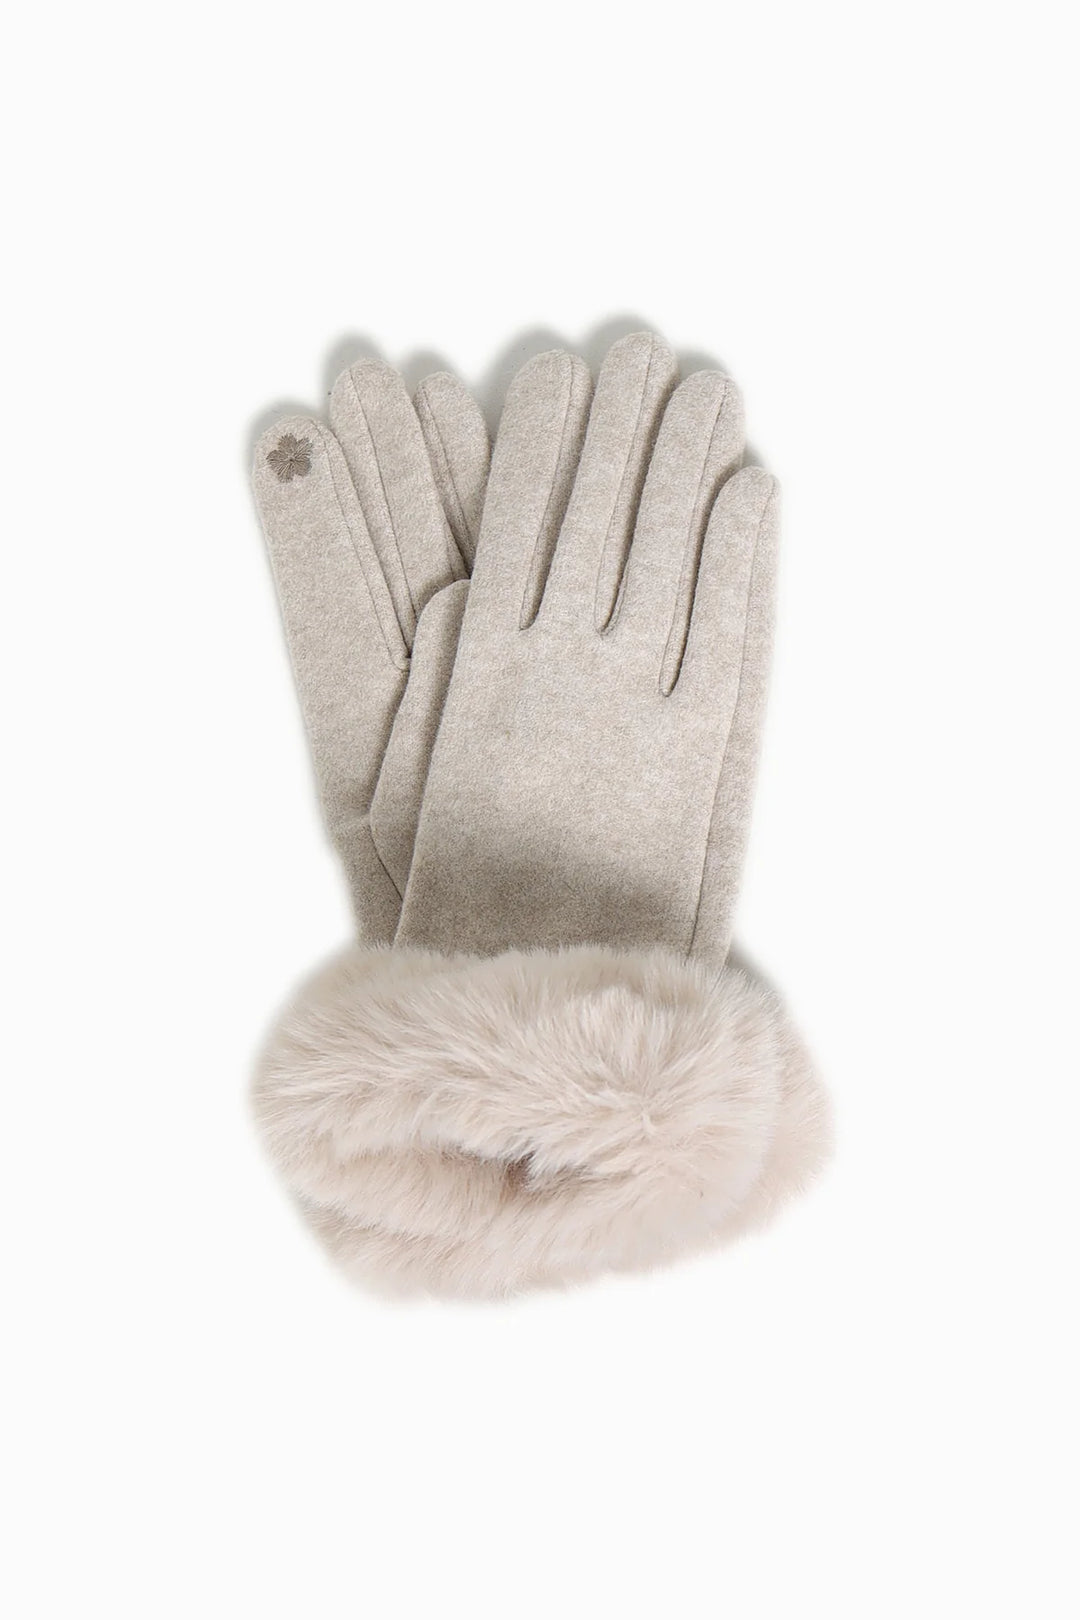 Lori Faux Fur Cuff Gloves in Tan - Madison's Niche 